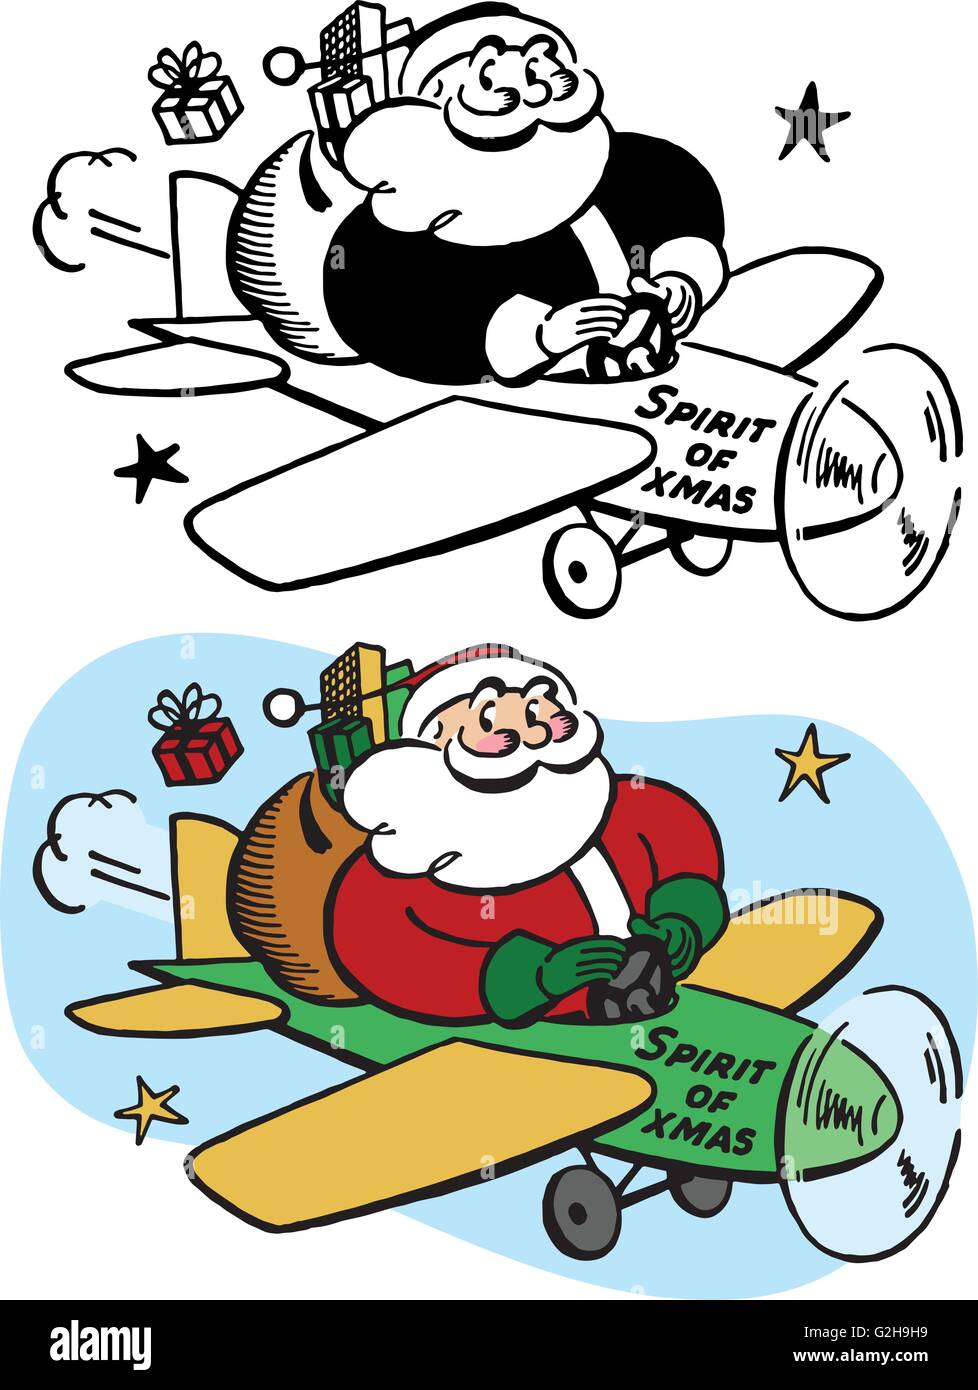 Santa Claus flying airplane Stock Image